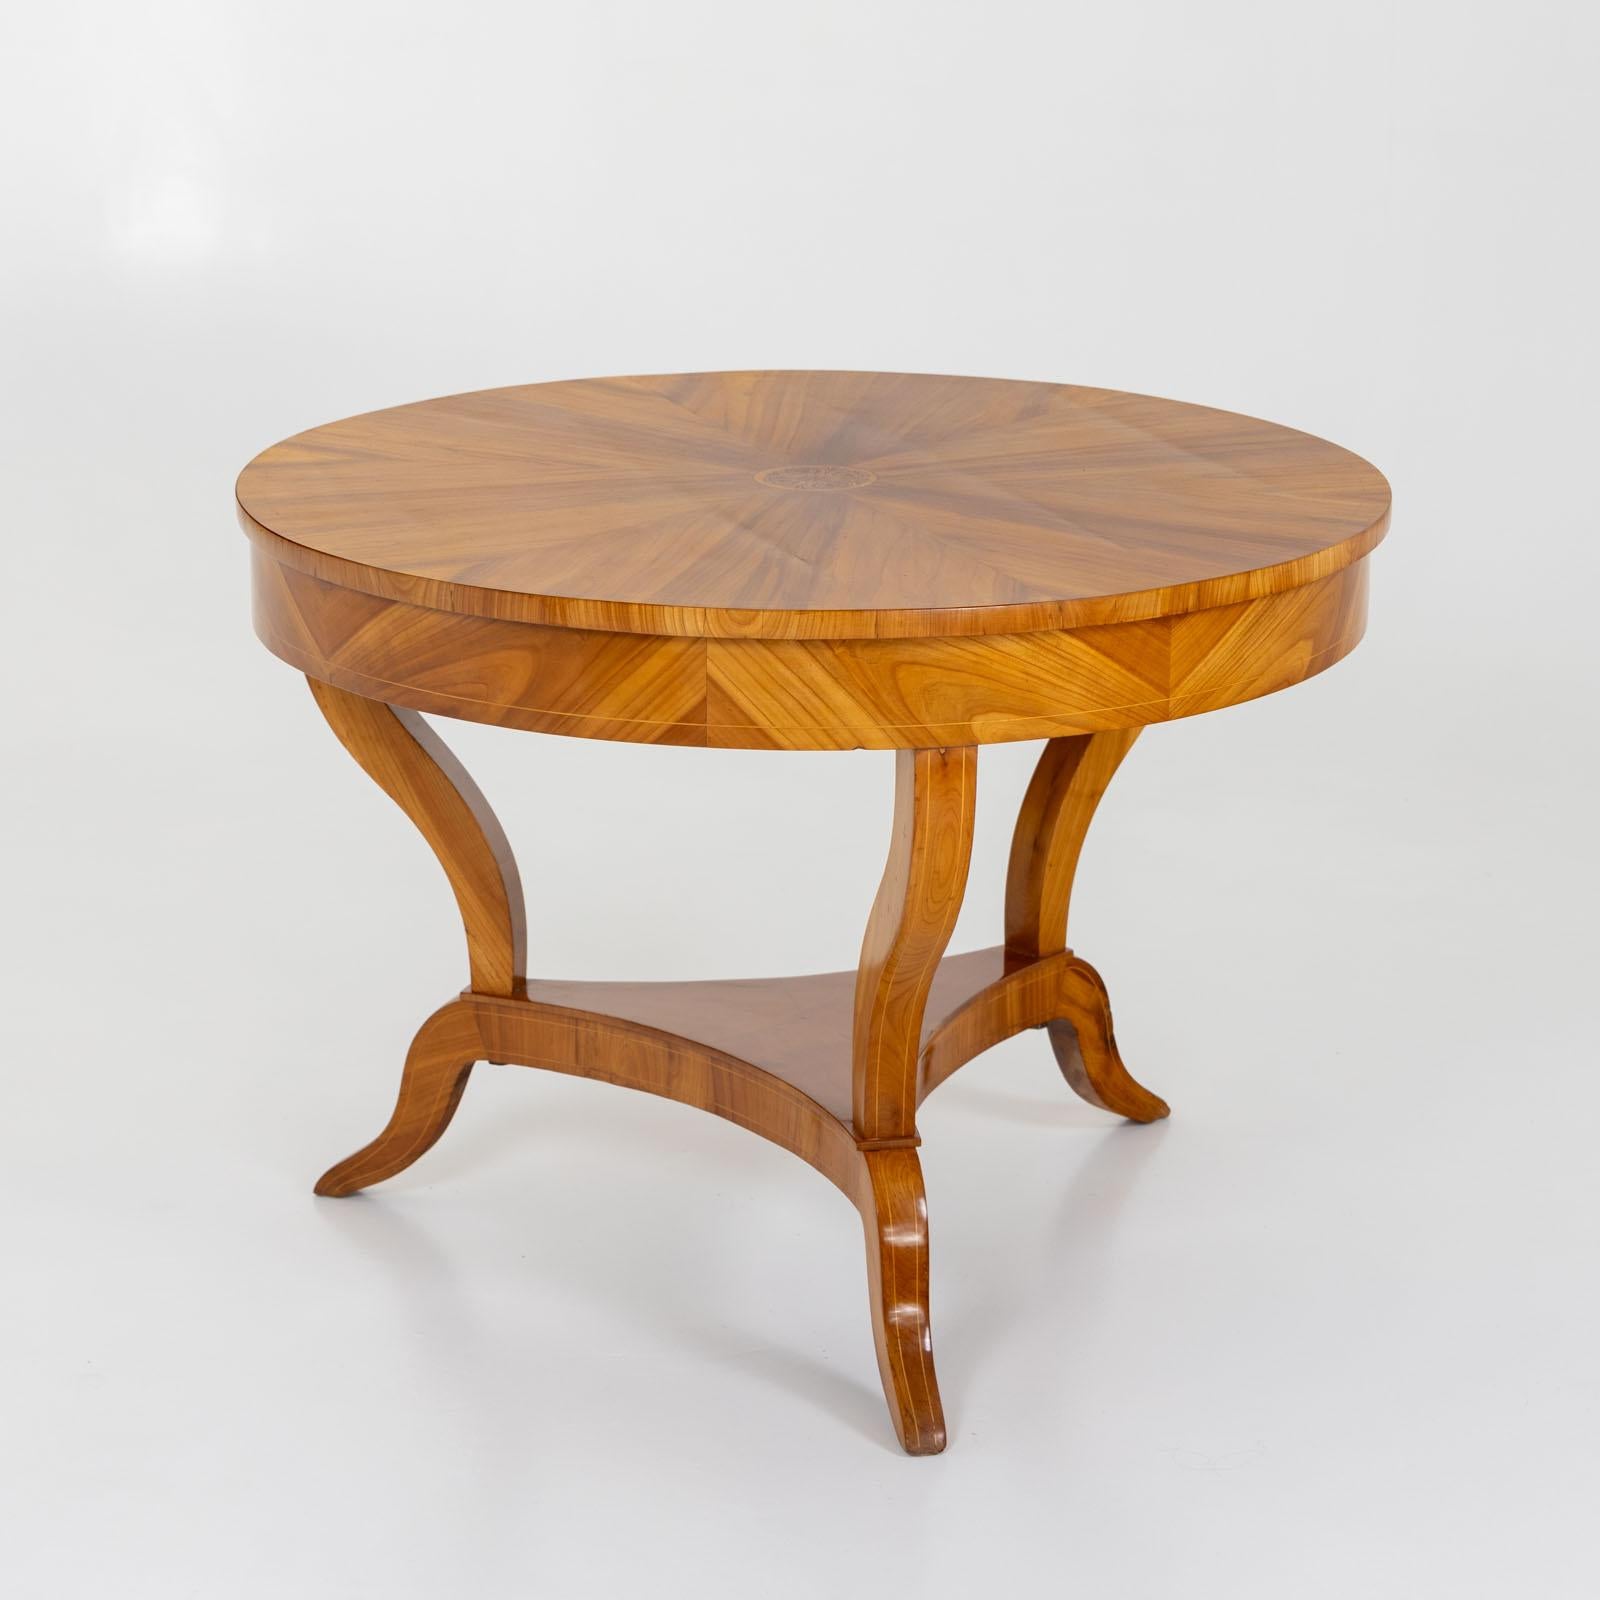 Biedermeier Salon Table, around 1820 In Good Condition For Sale In Greding, DE